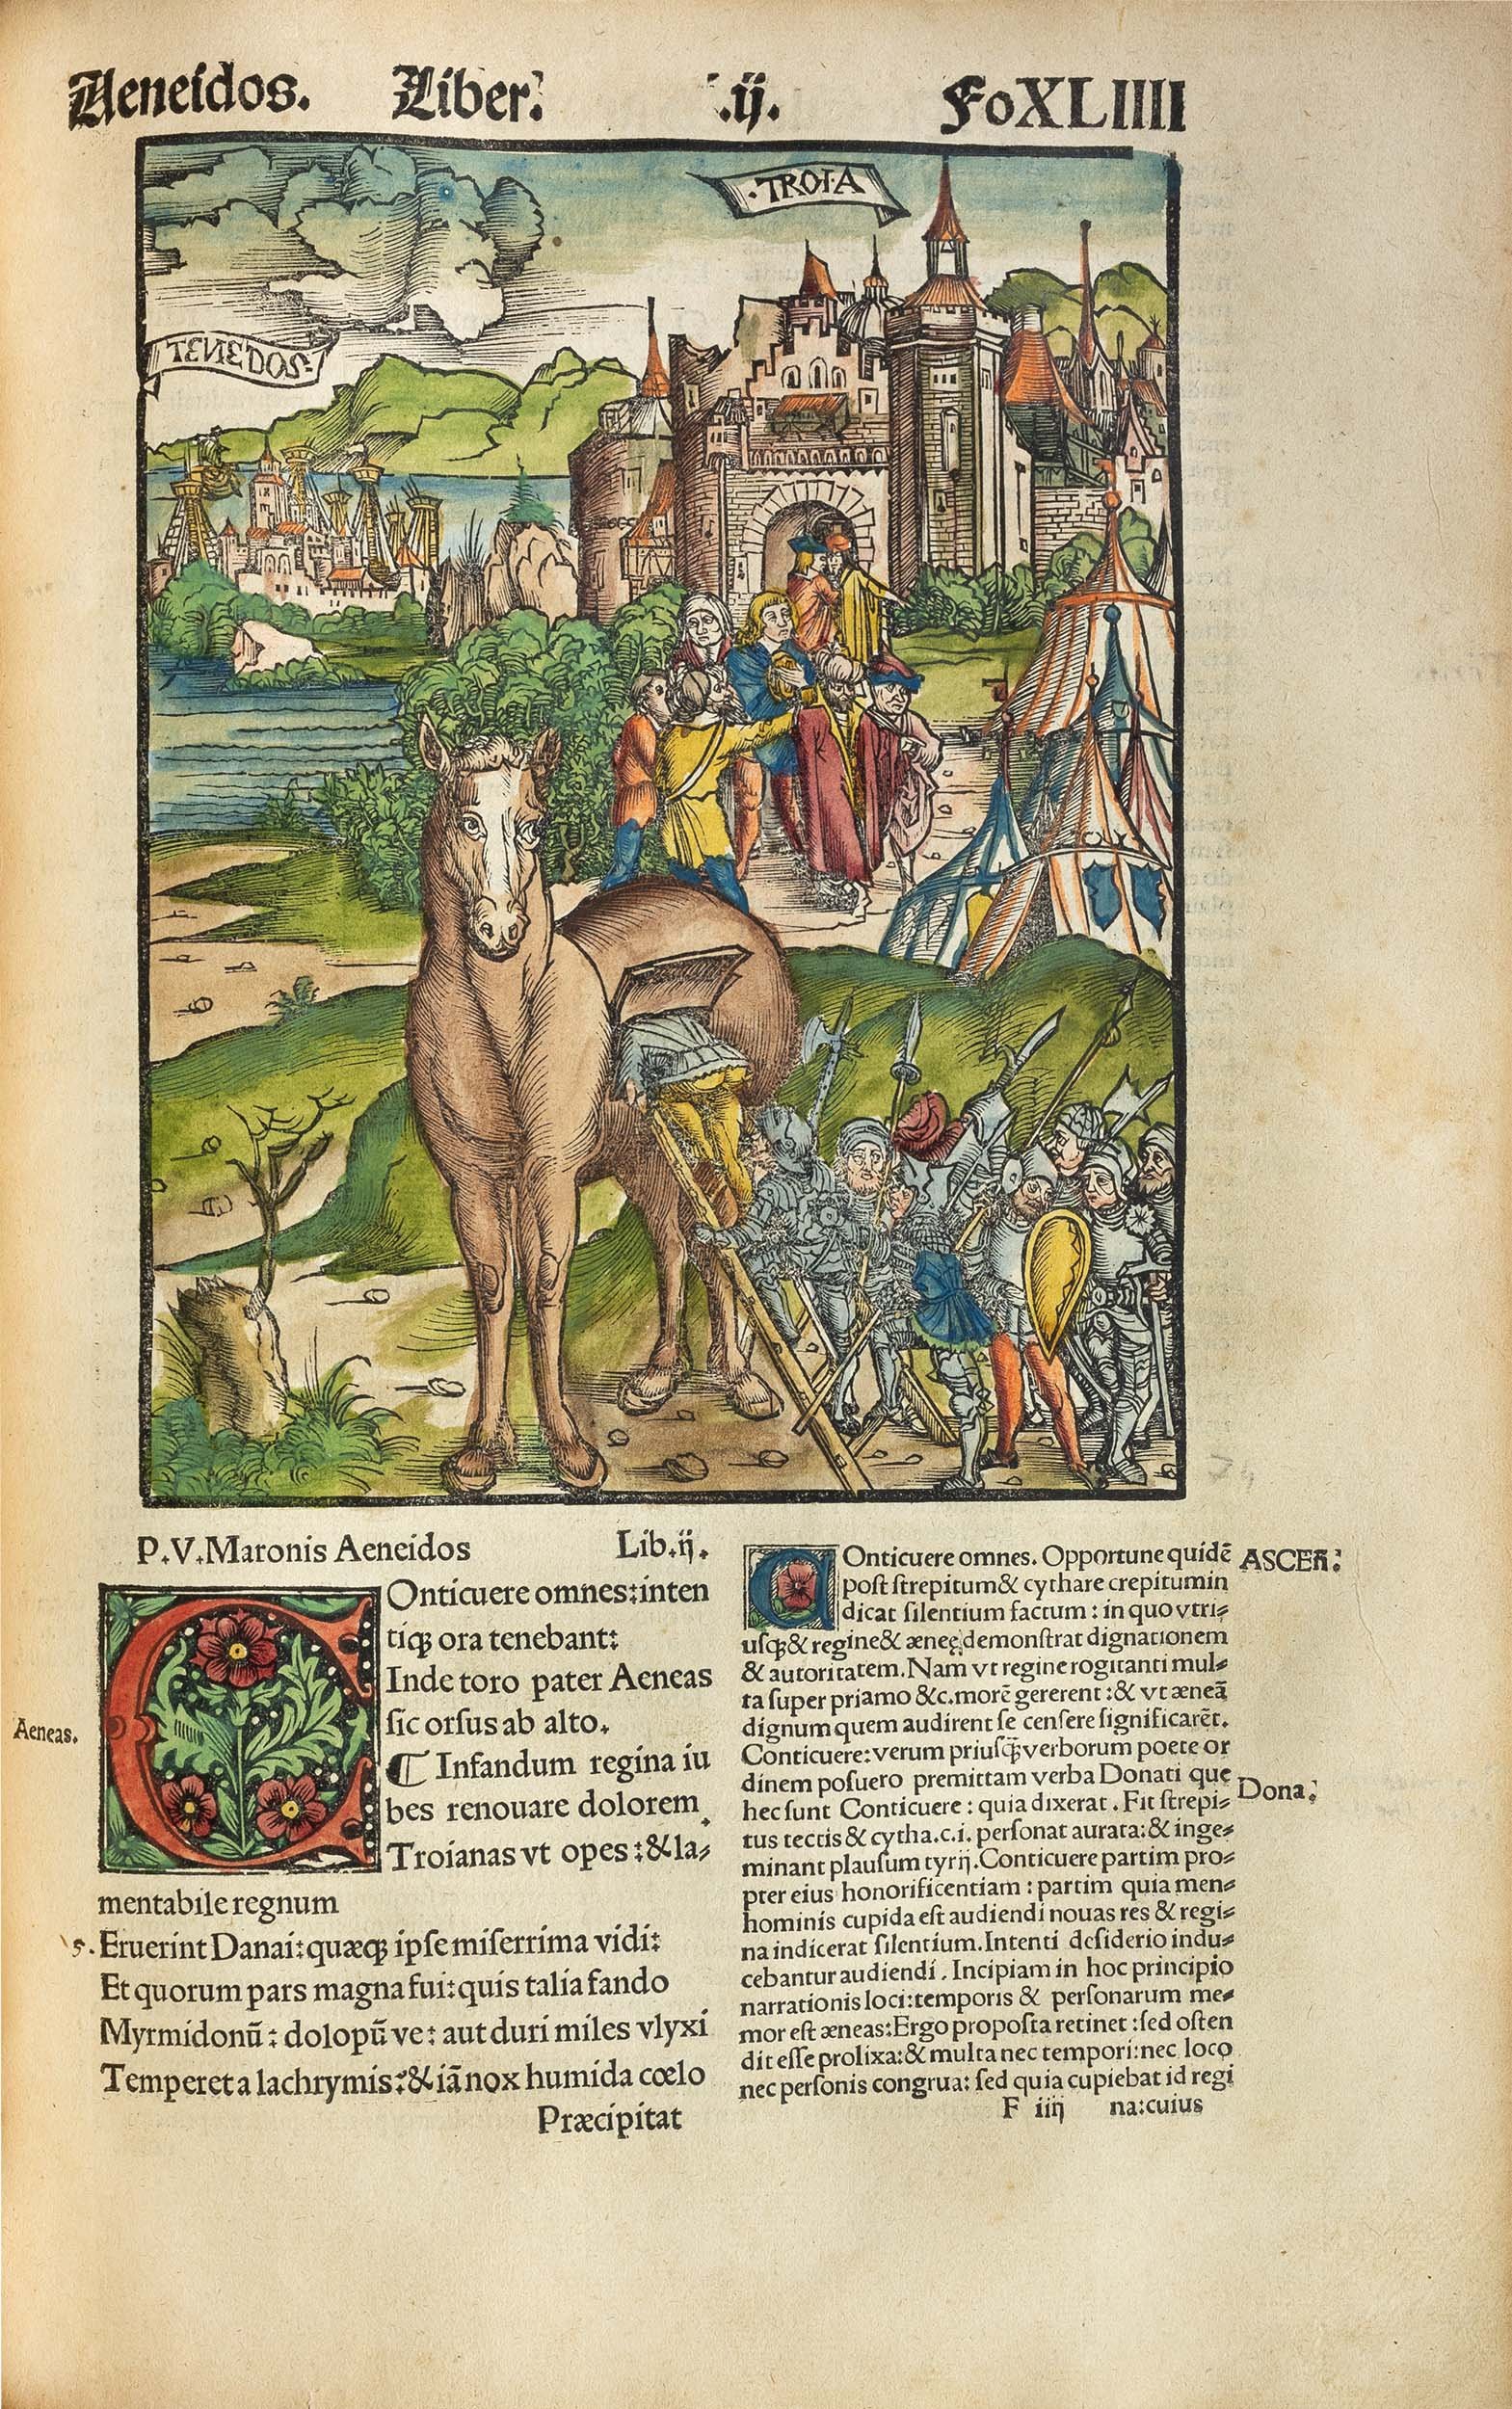 vergil-opera-1517-lyon-hand-coloured-woodcuts-for-sale-20.jpg